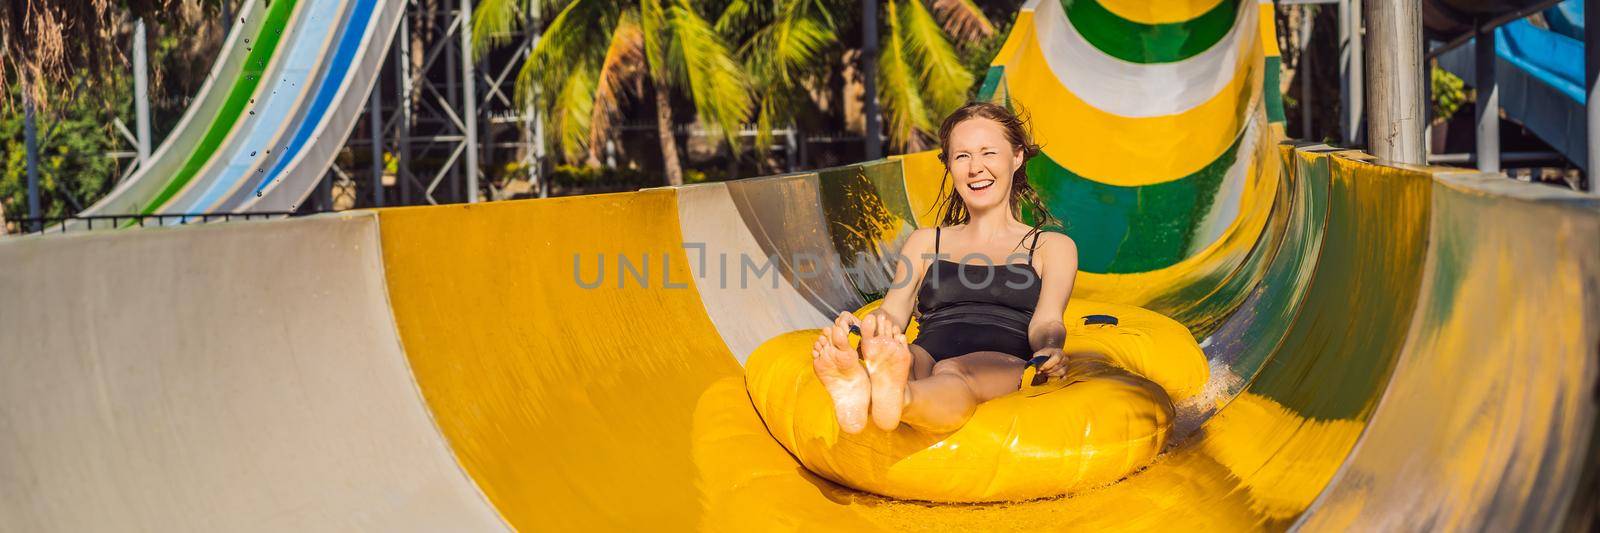 Happy woman going down a water slide BANNER, LONG FORMAT by galitskaya